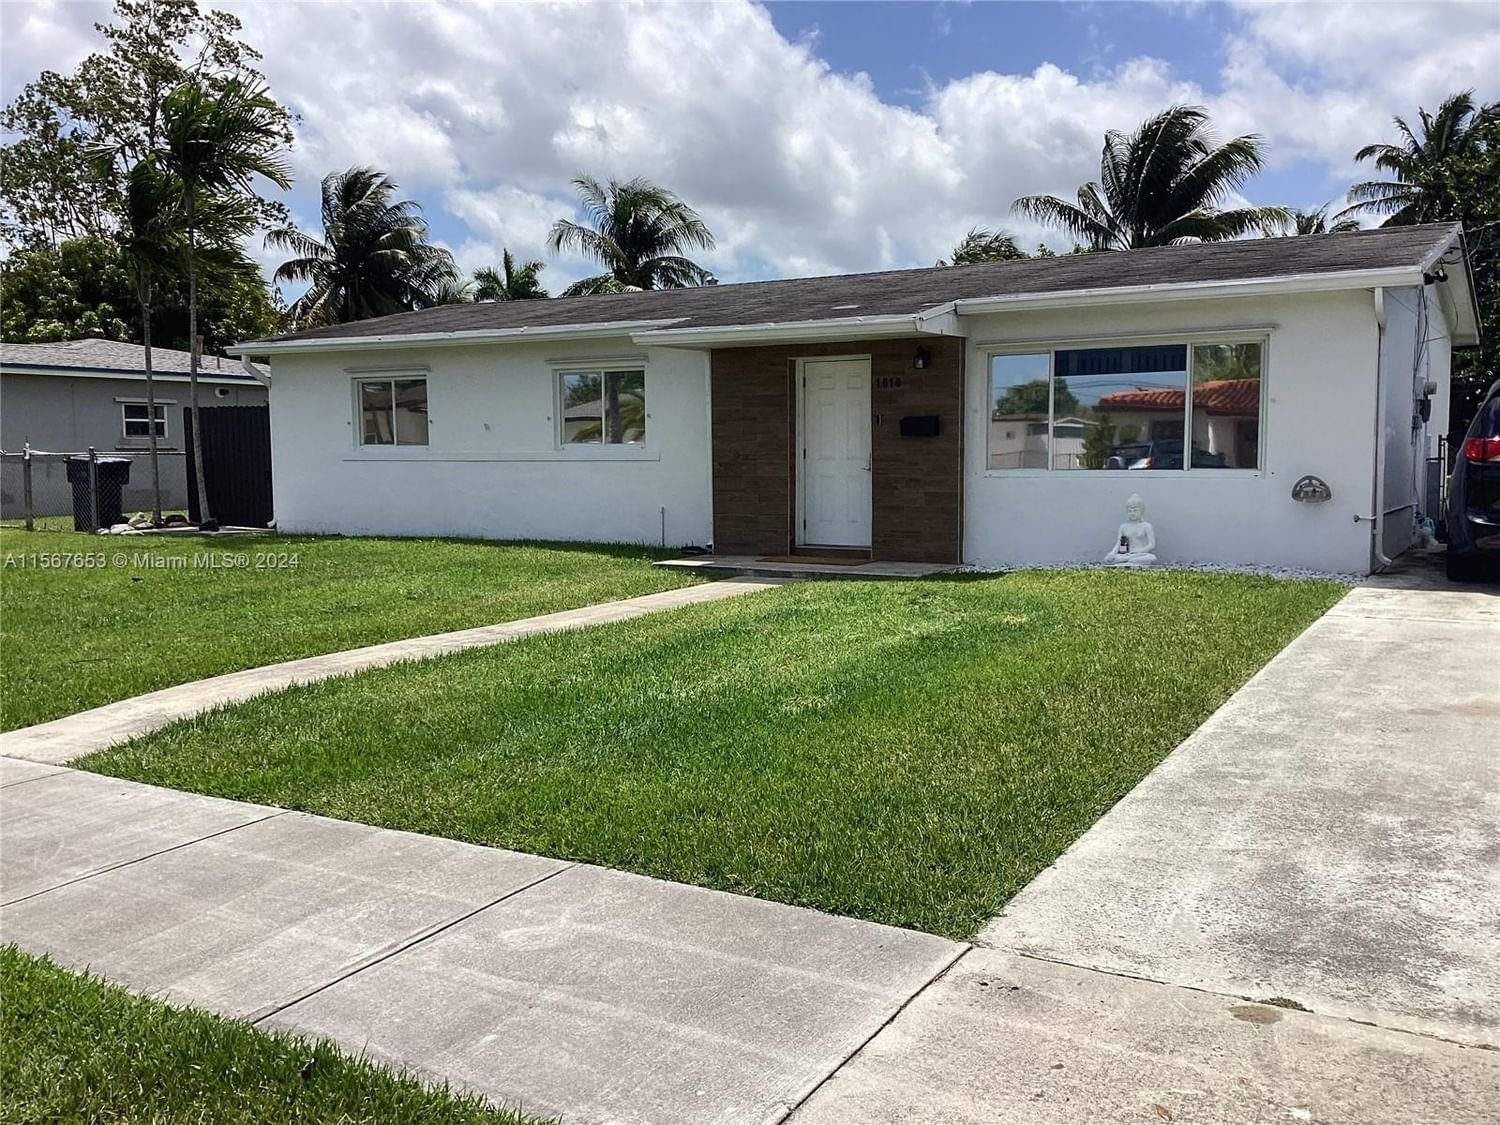 Real estate property located at 1010 93rd Pl, Miami-Dade County, CORAL PARK ESTATES SEC 4, Miami, FL